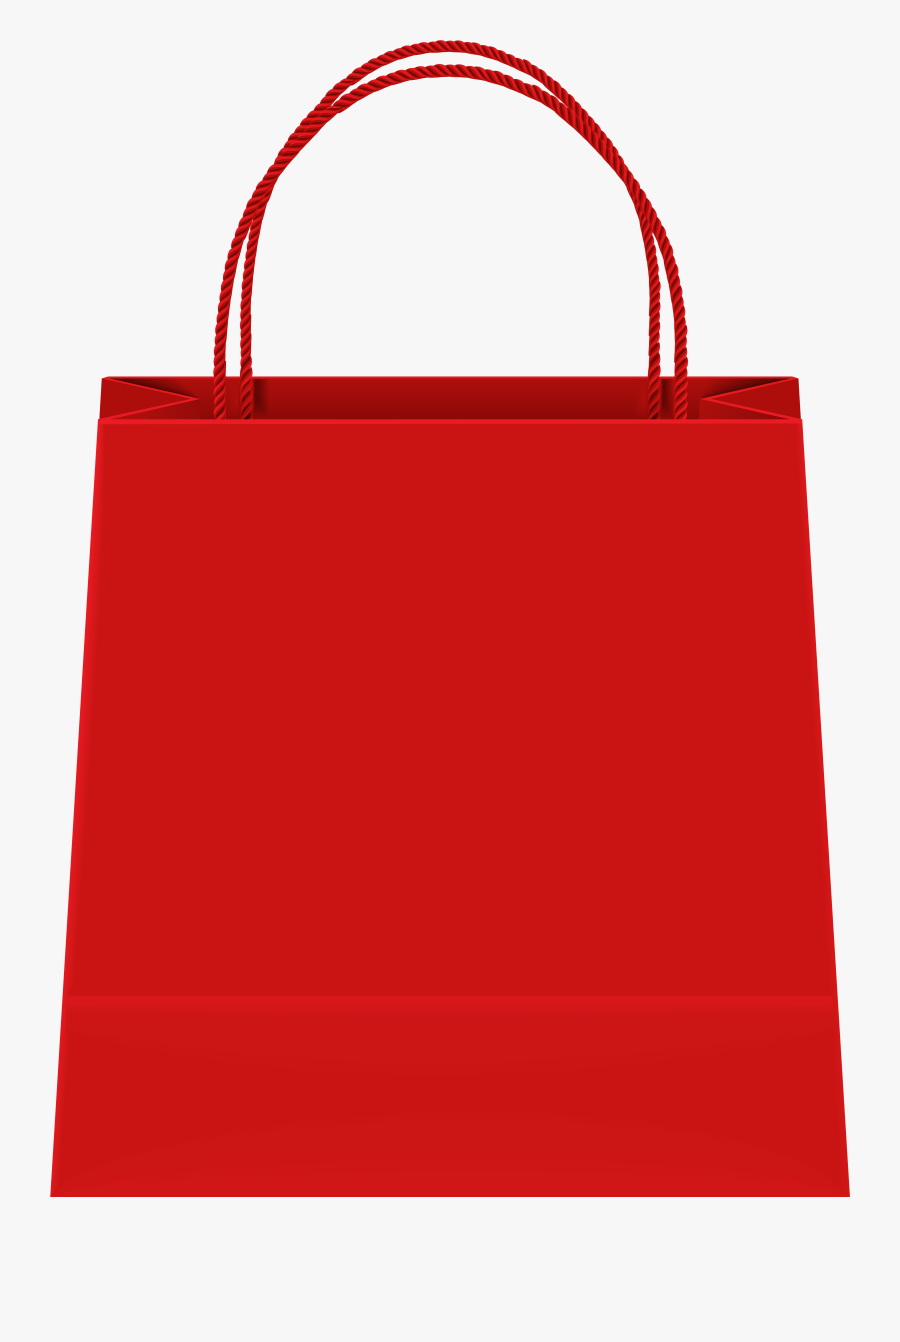 Bag Clipart Gift - Gift Bag Clipart Png, Transparent Clipart